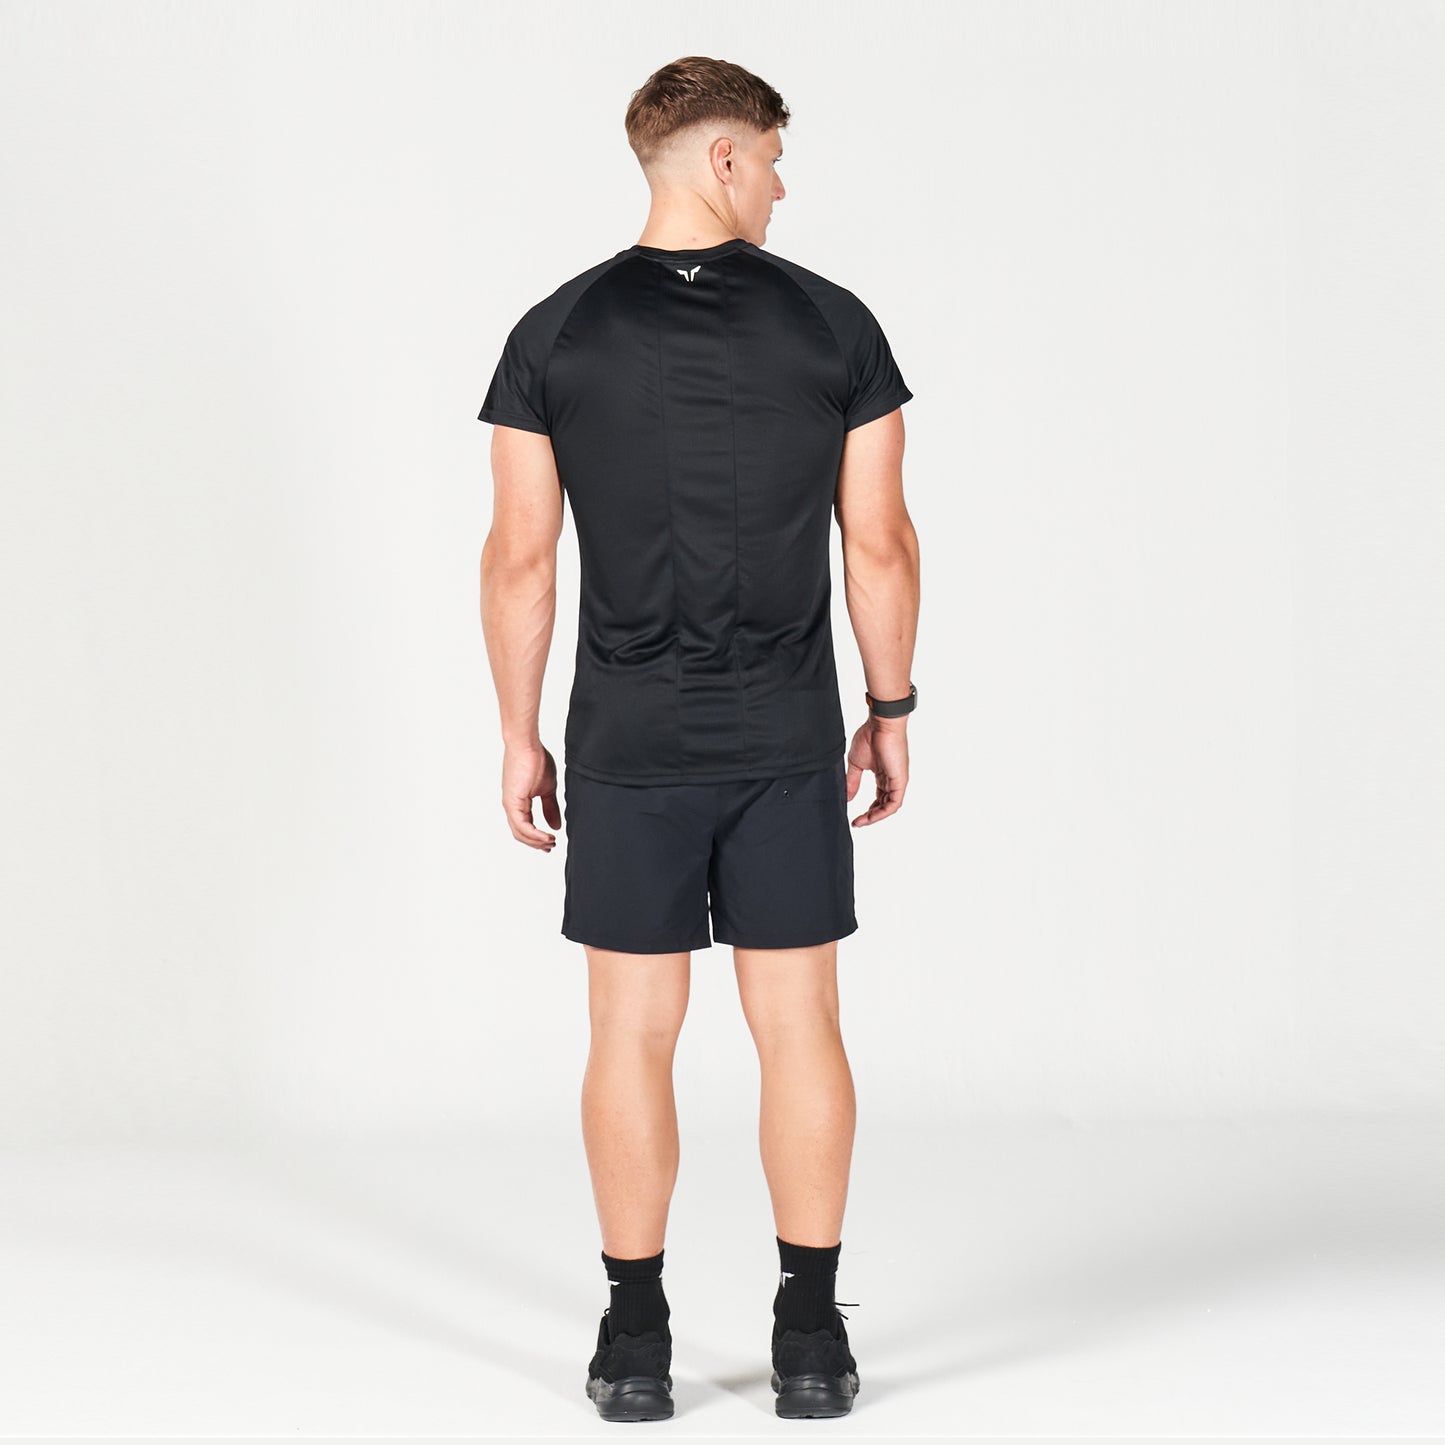 squatwolf-gym-wear-statement-dryflex-tee-black-workout-shirts-for-men